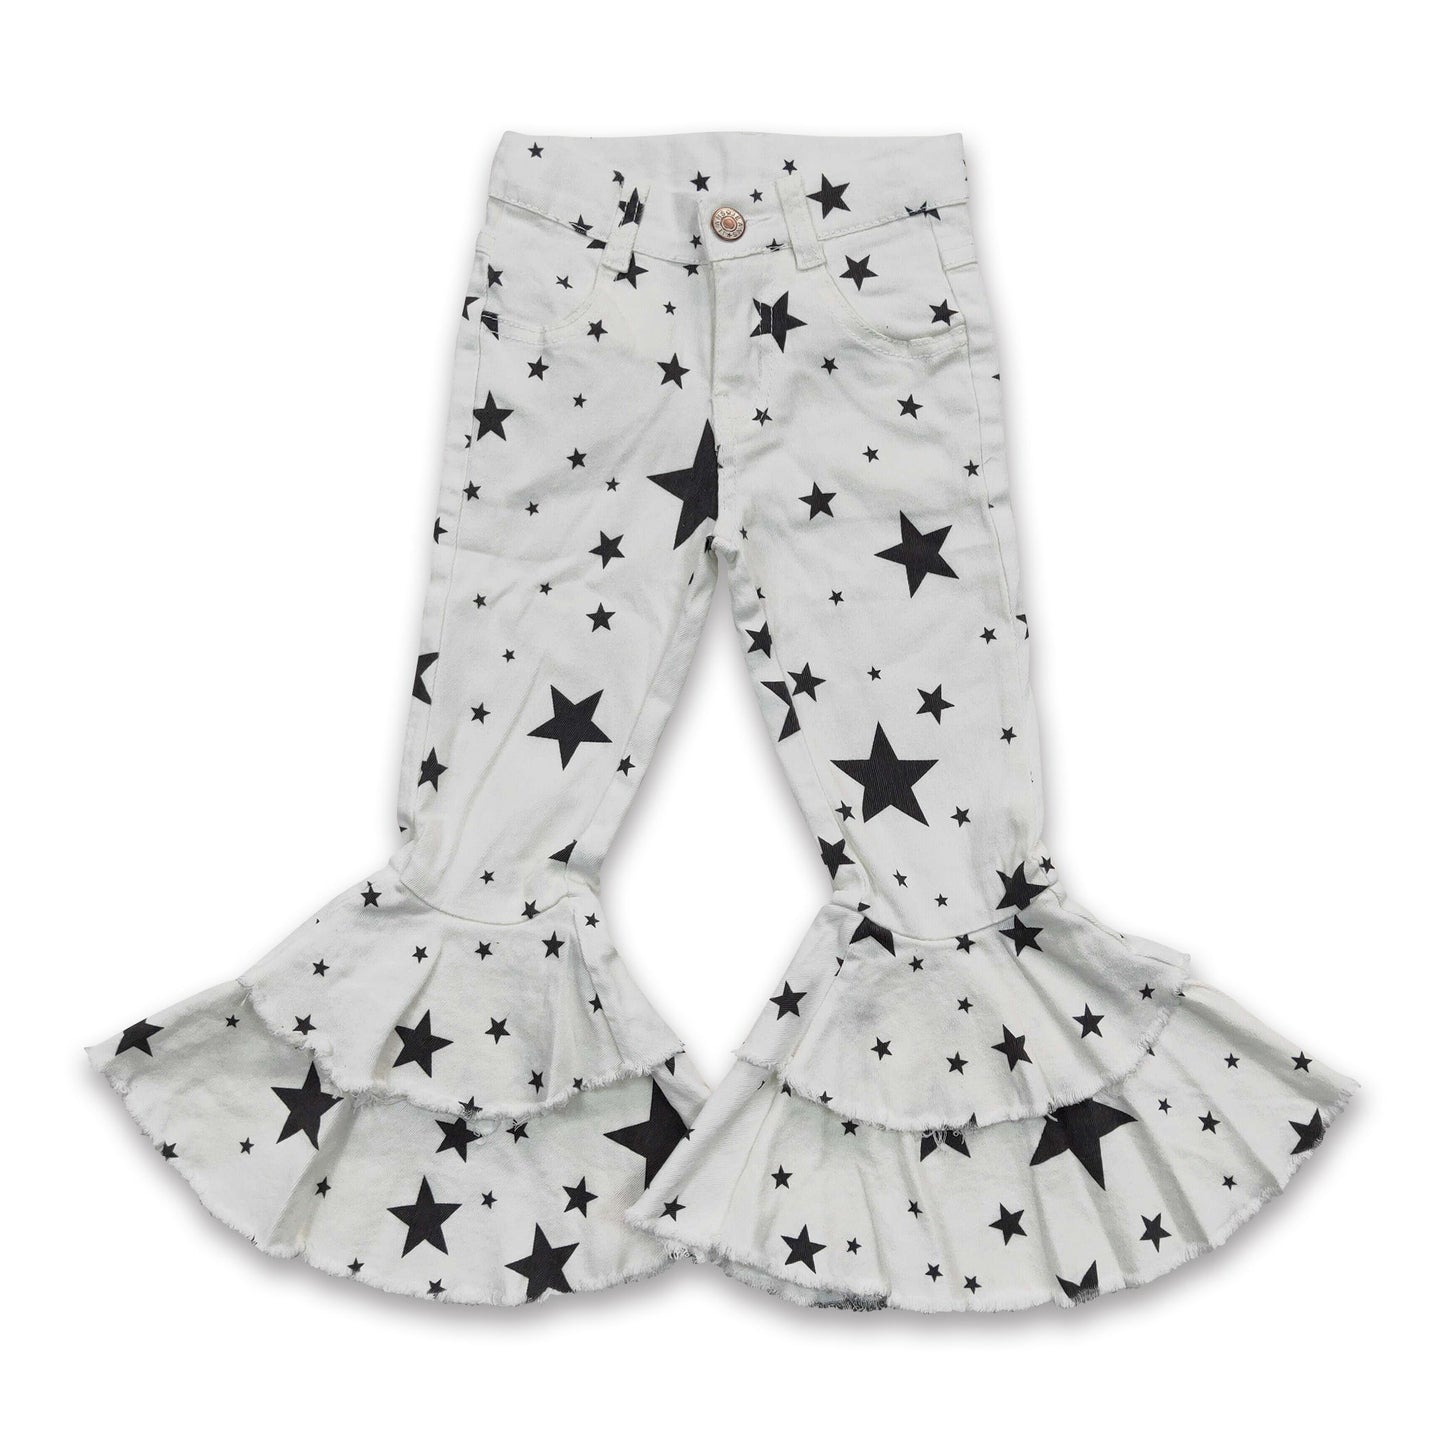 White stars elastic waistband strentchy girls jeans